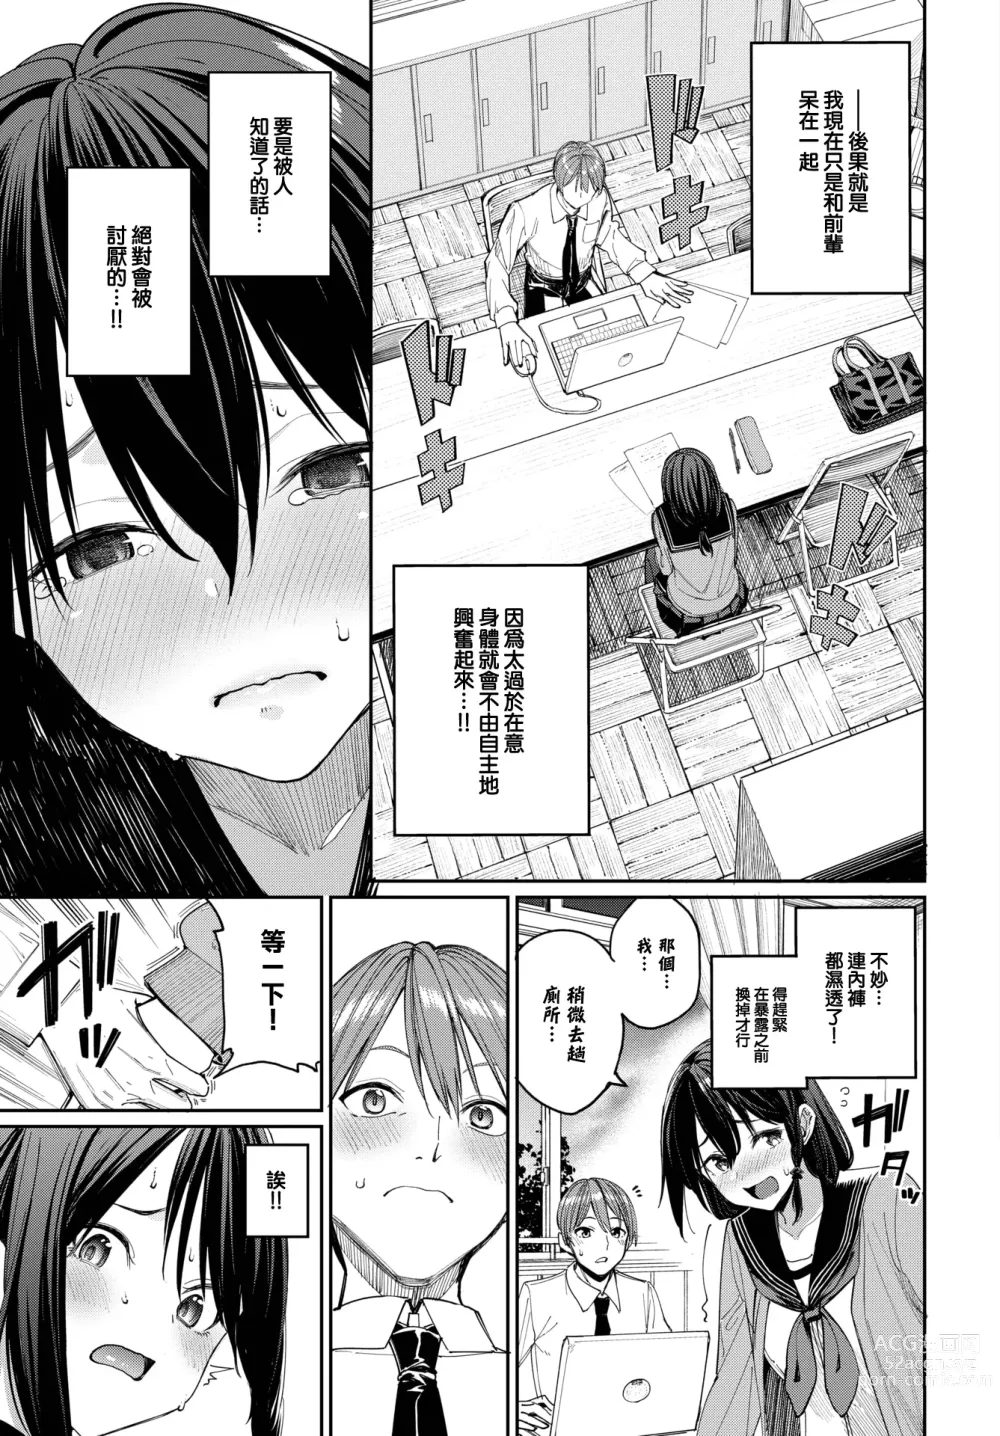 Page 5 of manga Riko no Hatsujou Chuuihou! - Im in heat so much. I can't take it...